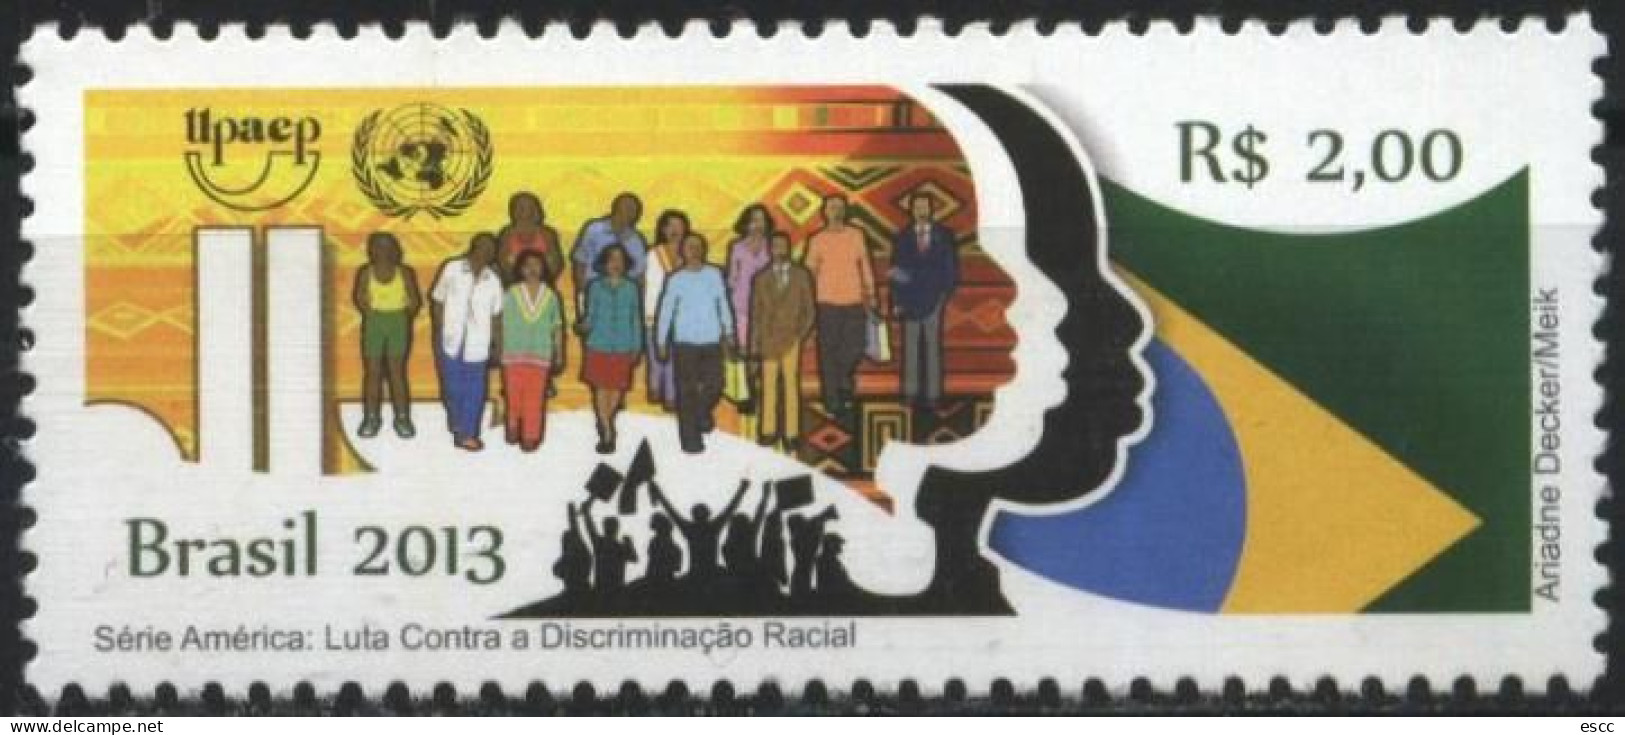 Mint Stamp  UPAEP 2013 From Brazil Brasil - Nuevos